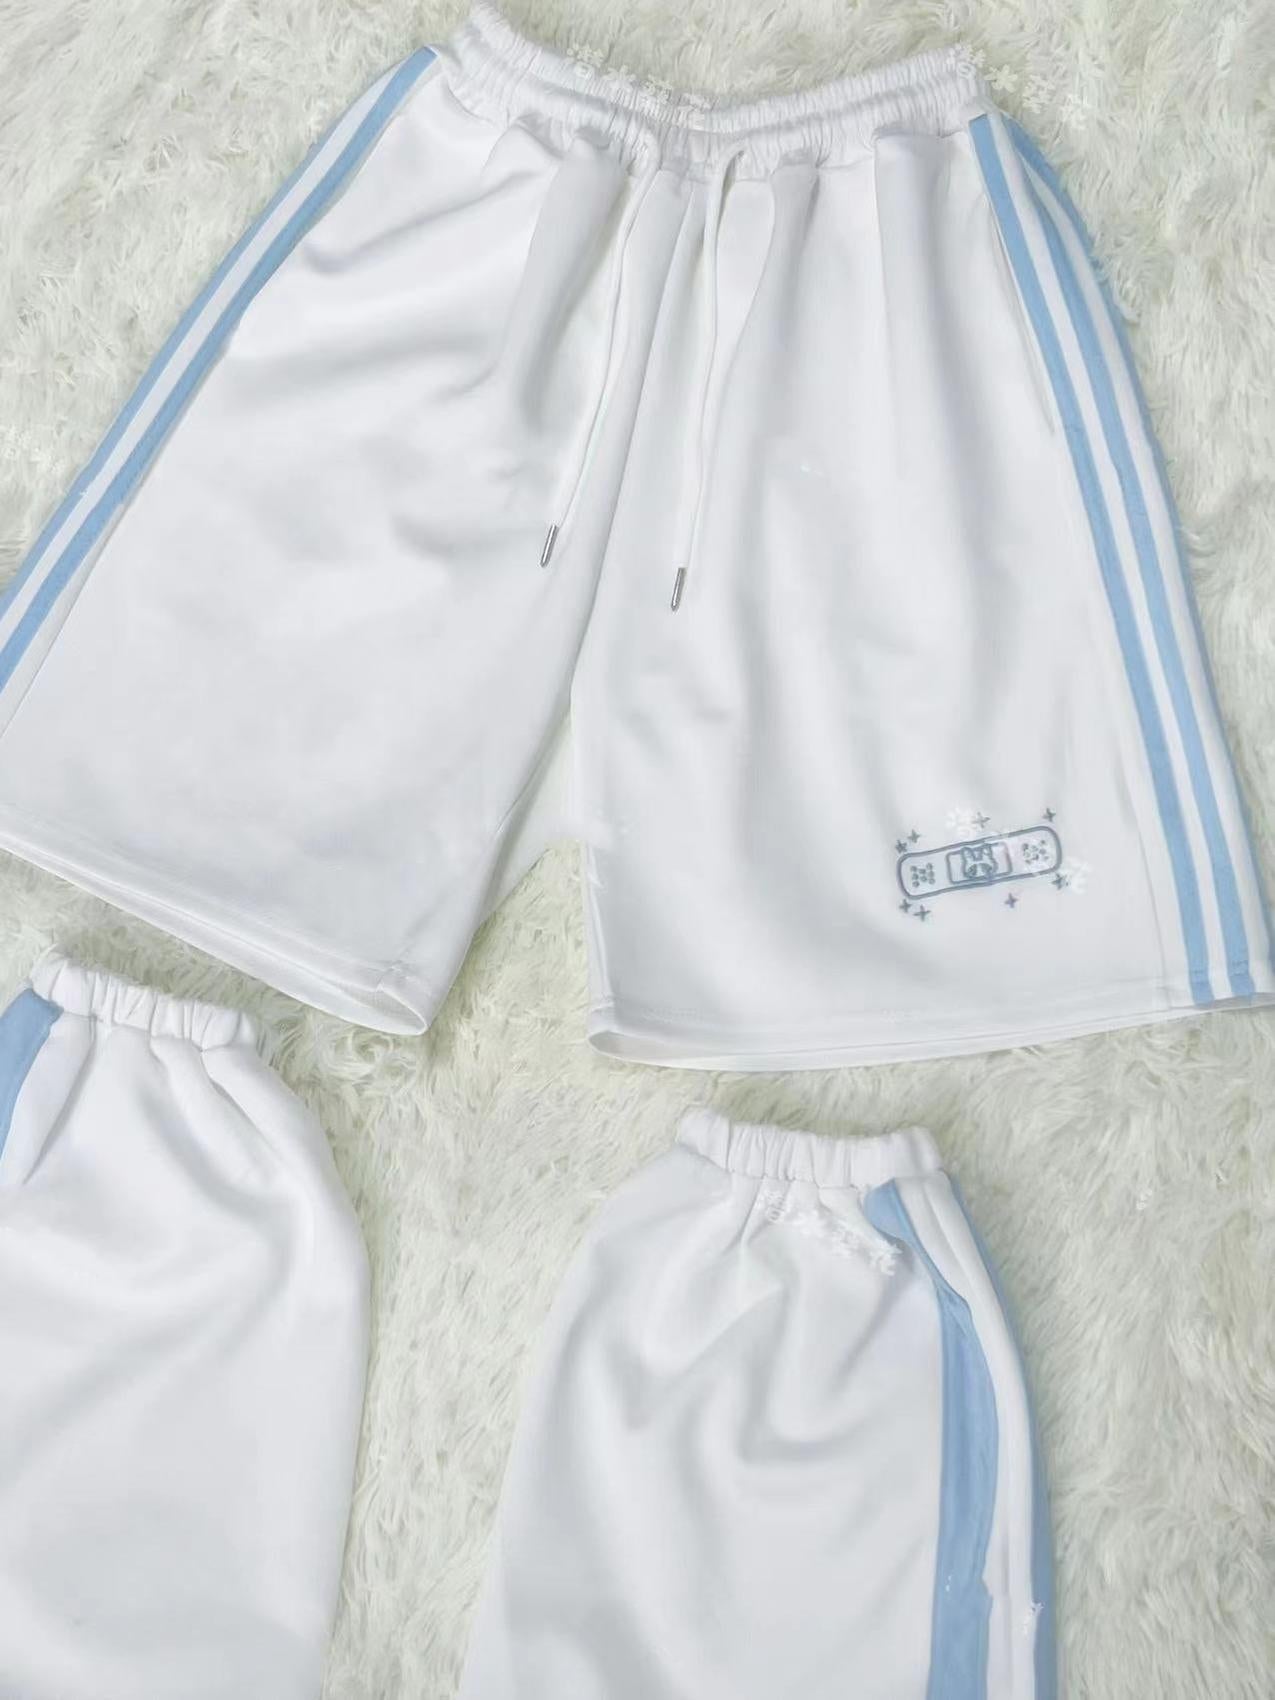 Tenshi Kaiwai Outfit Sets Jacket Shorts And Leg Warmers (L M S) 37676:565600